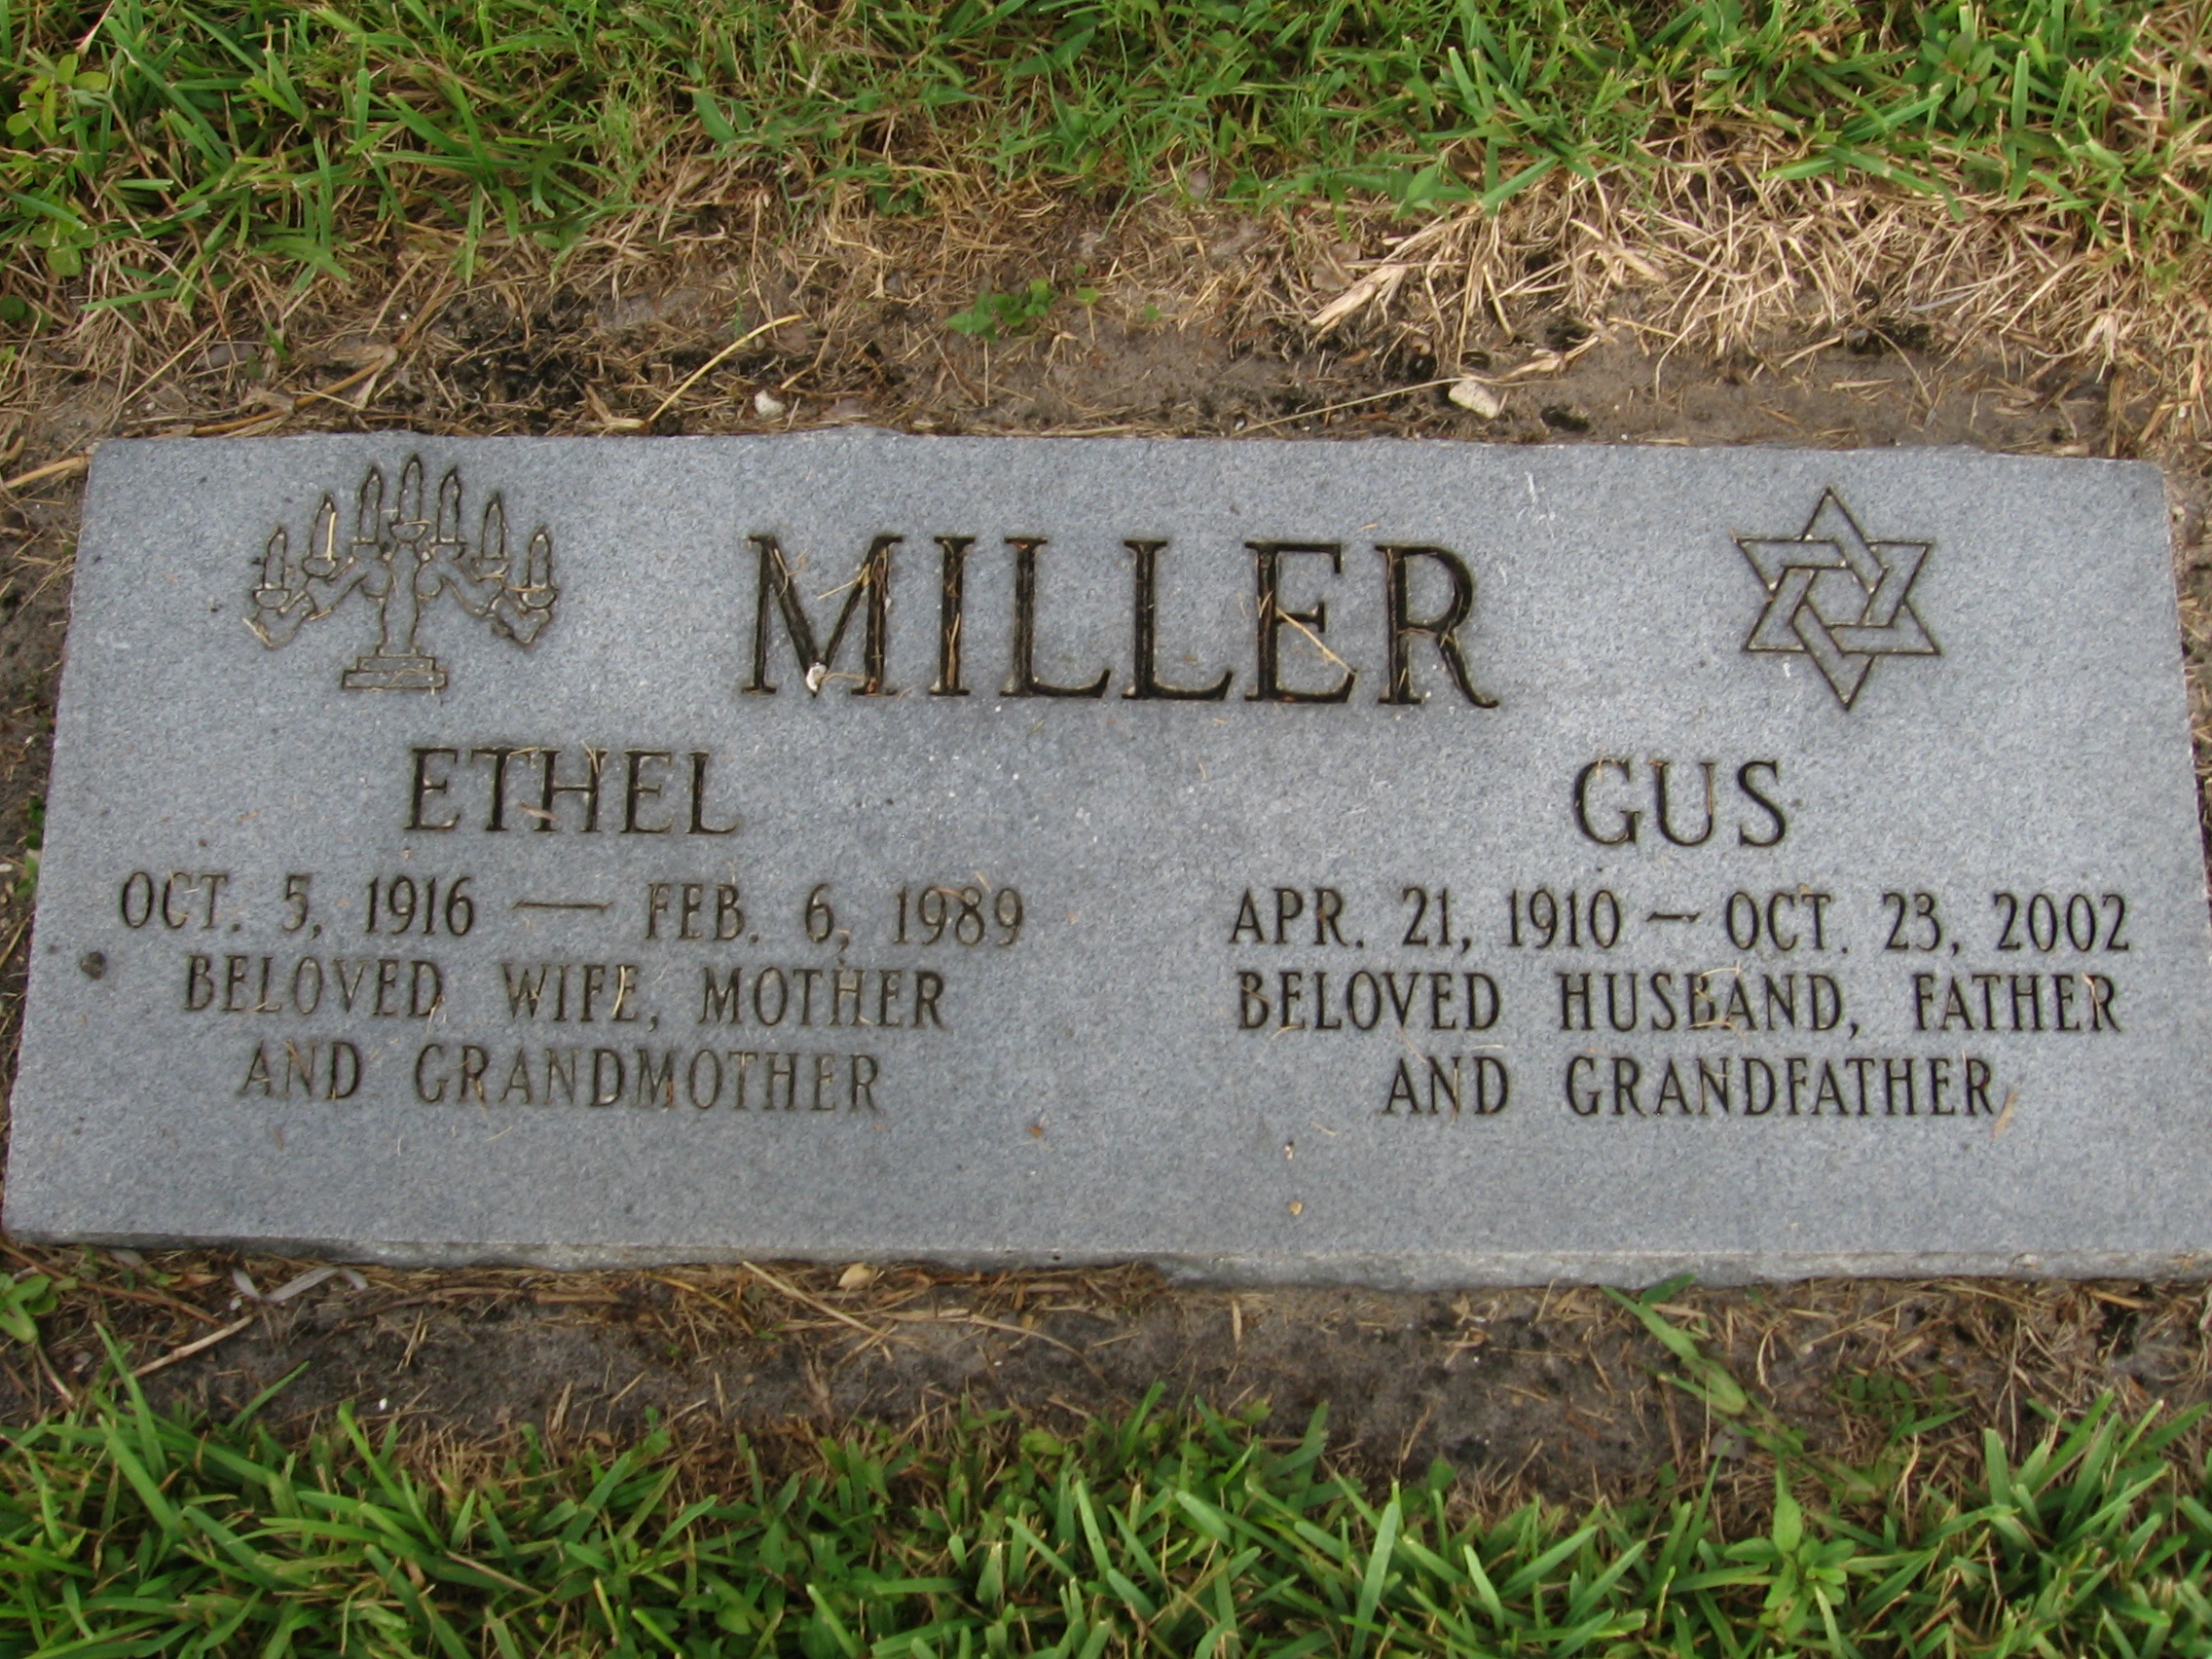 Gus Miller